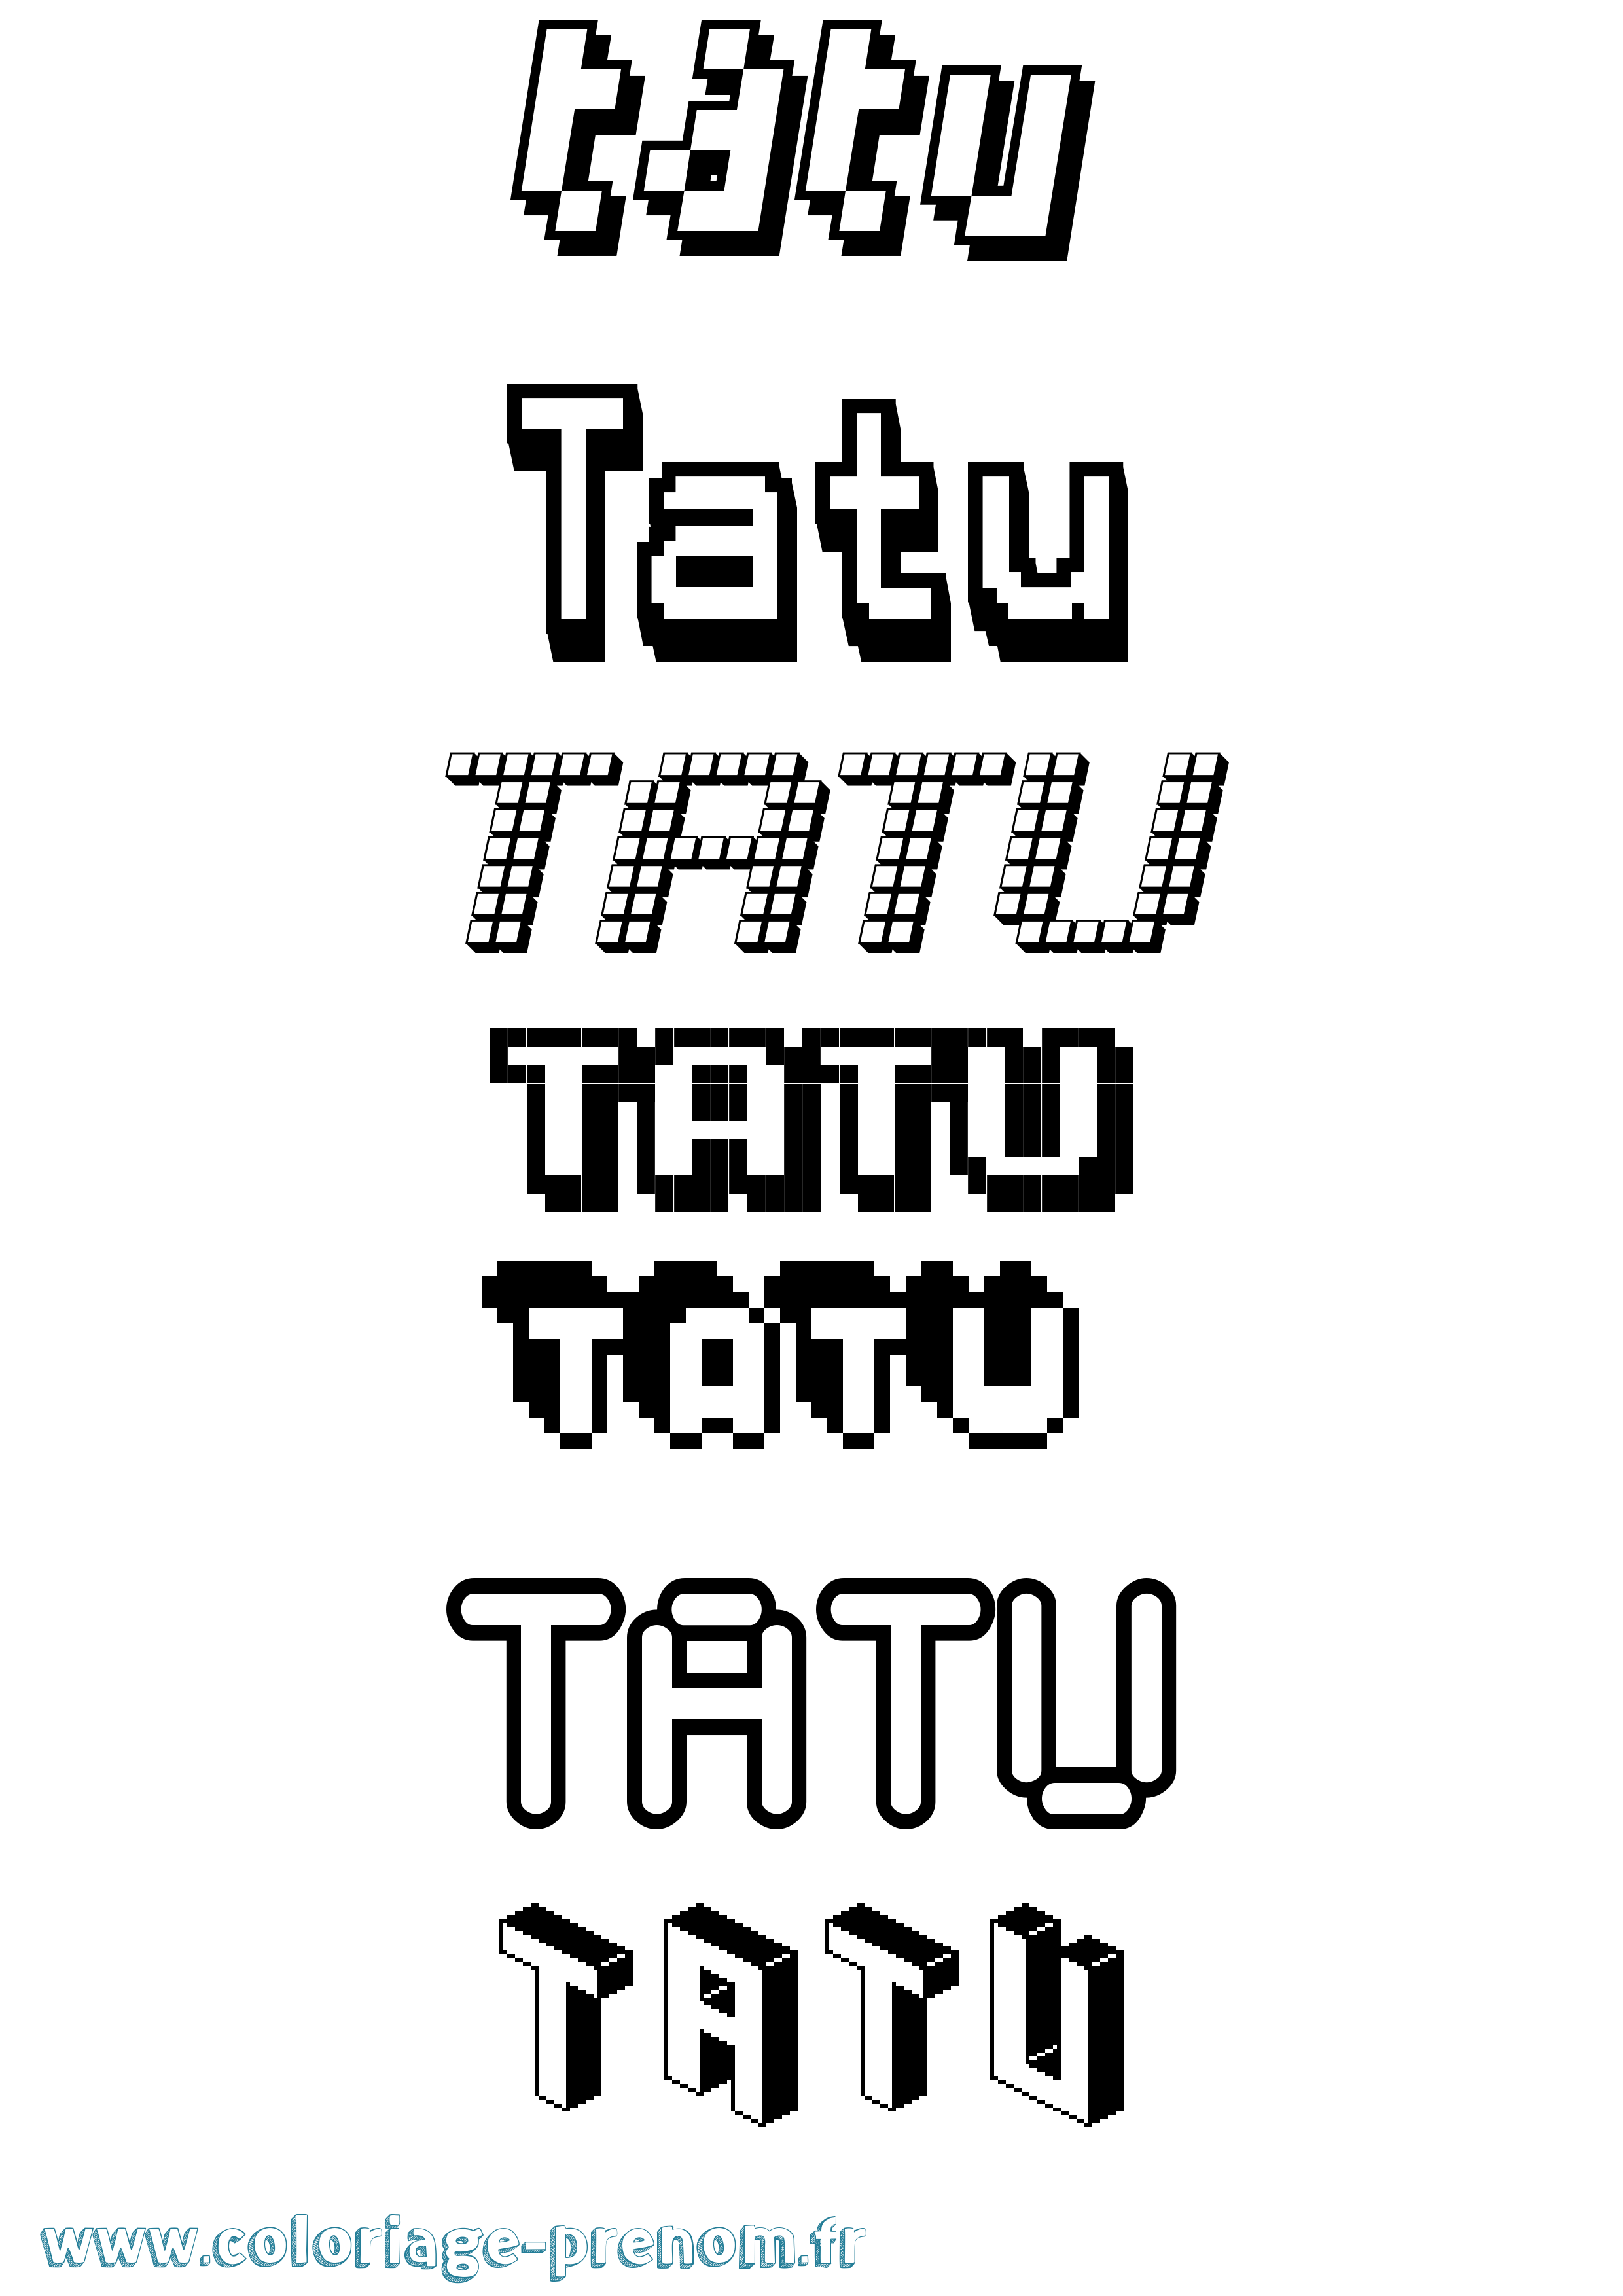 Coloriage prénom Tatu Pixel